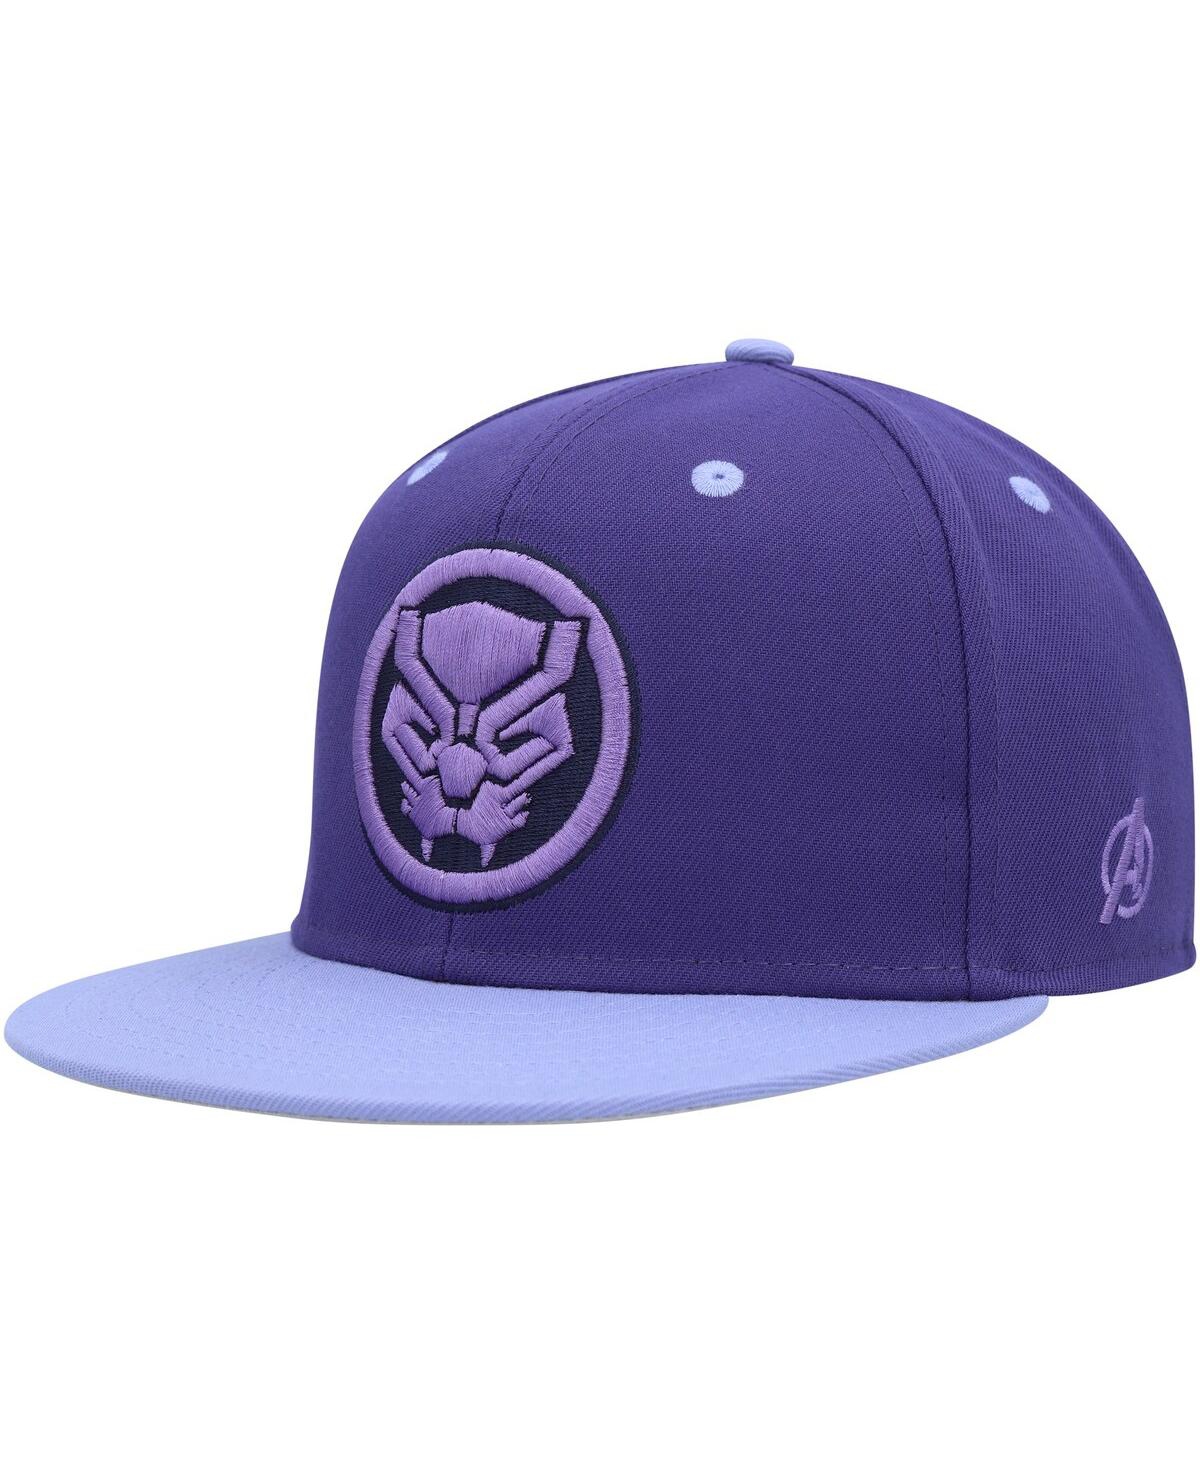 Shop Marvel Men's  Purple Black Panther Fitted Hat